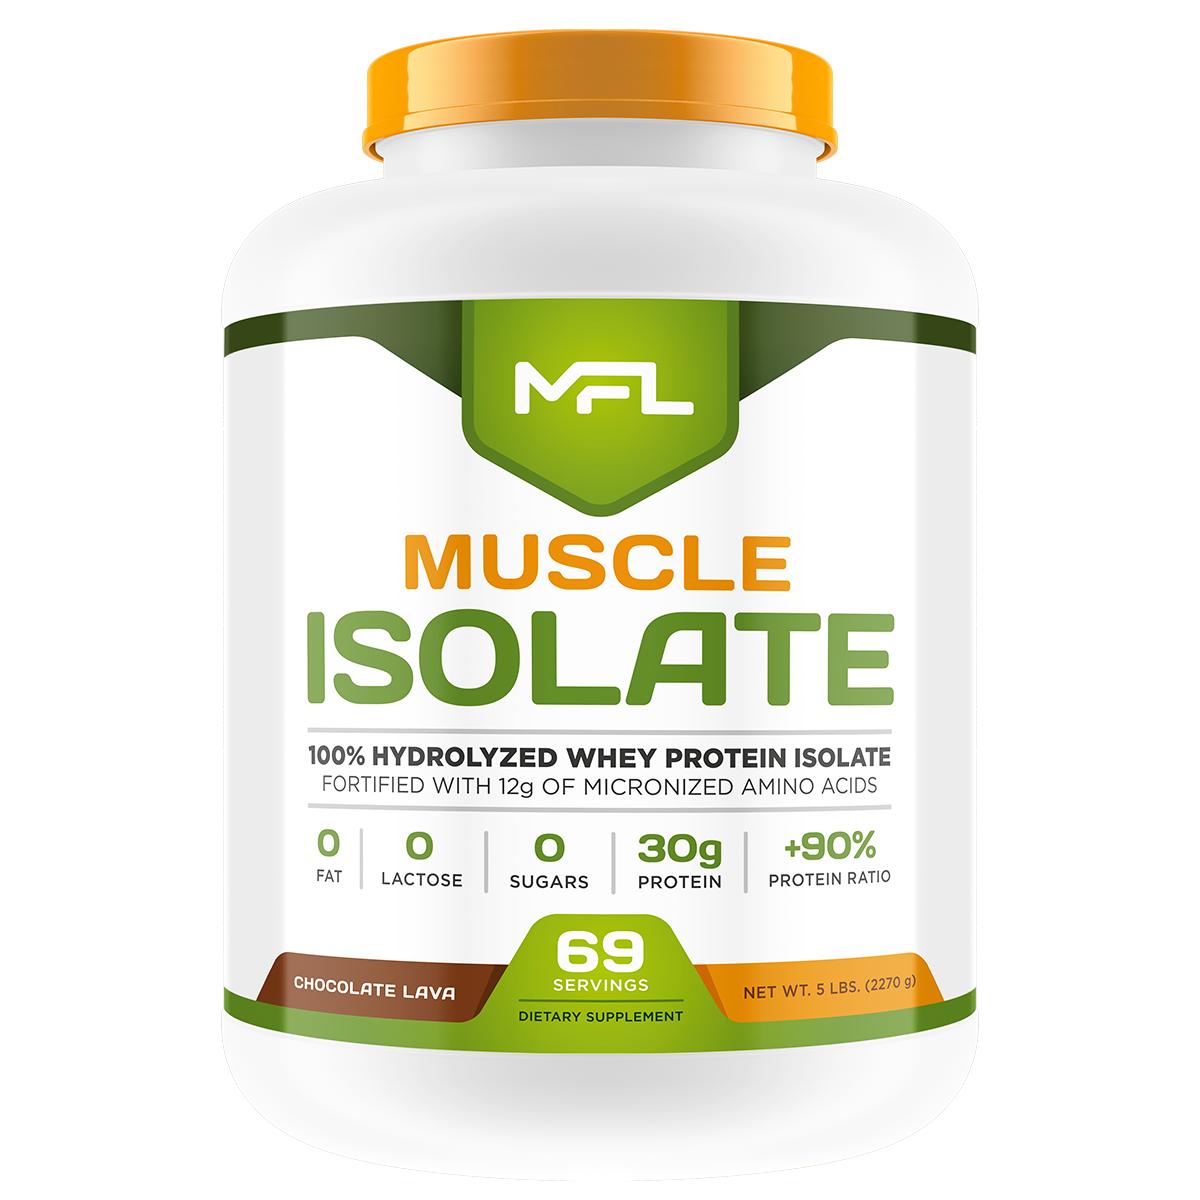 MFL MUSCLE ISOLATE 5 LBS - CHOCOLATE เวย์โปรตีน ไขมัน0 / น้ำตาล0